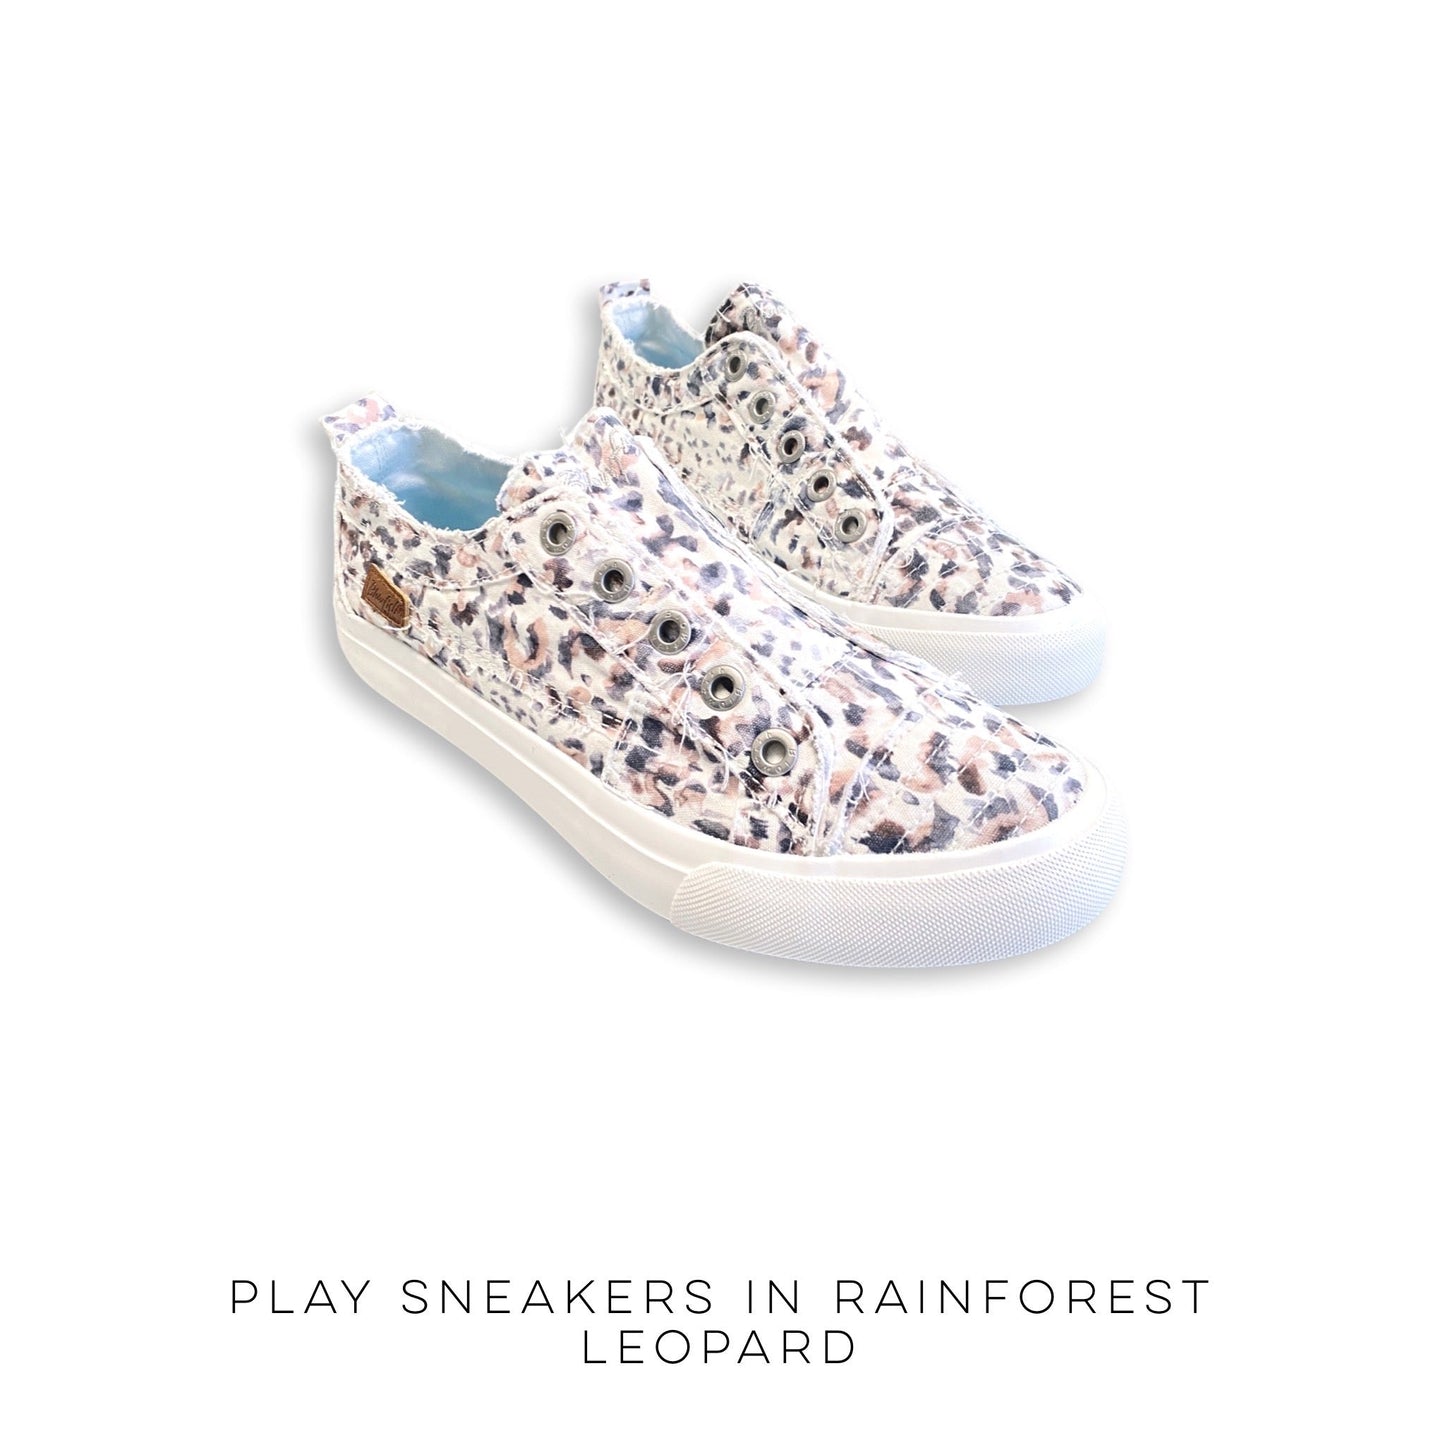 Play Sneakers in Rainforest Leopard